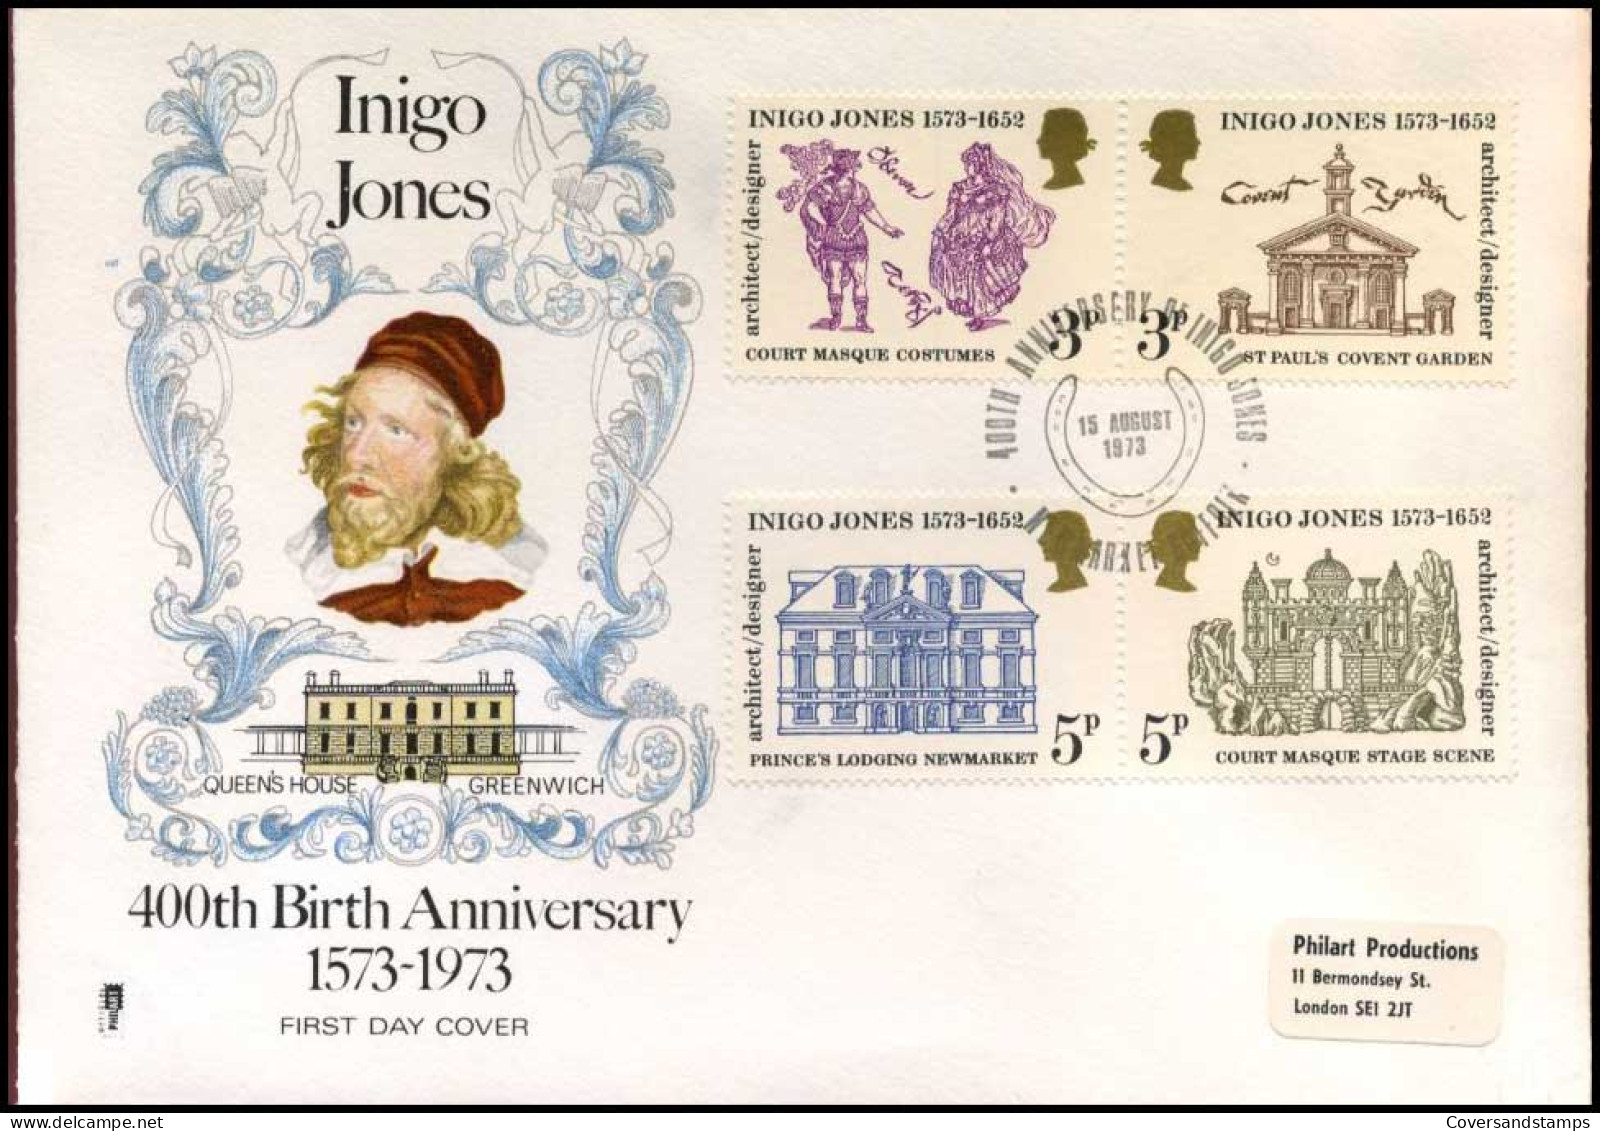 Great-Britain - FDC - Inigo Jones, 400th Birth Anniversary - 1971-1980 Decimal Issues